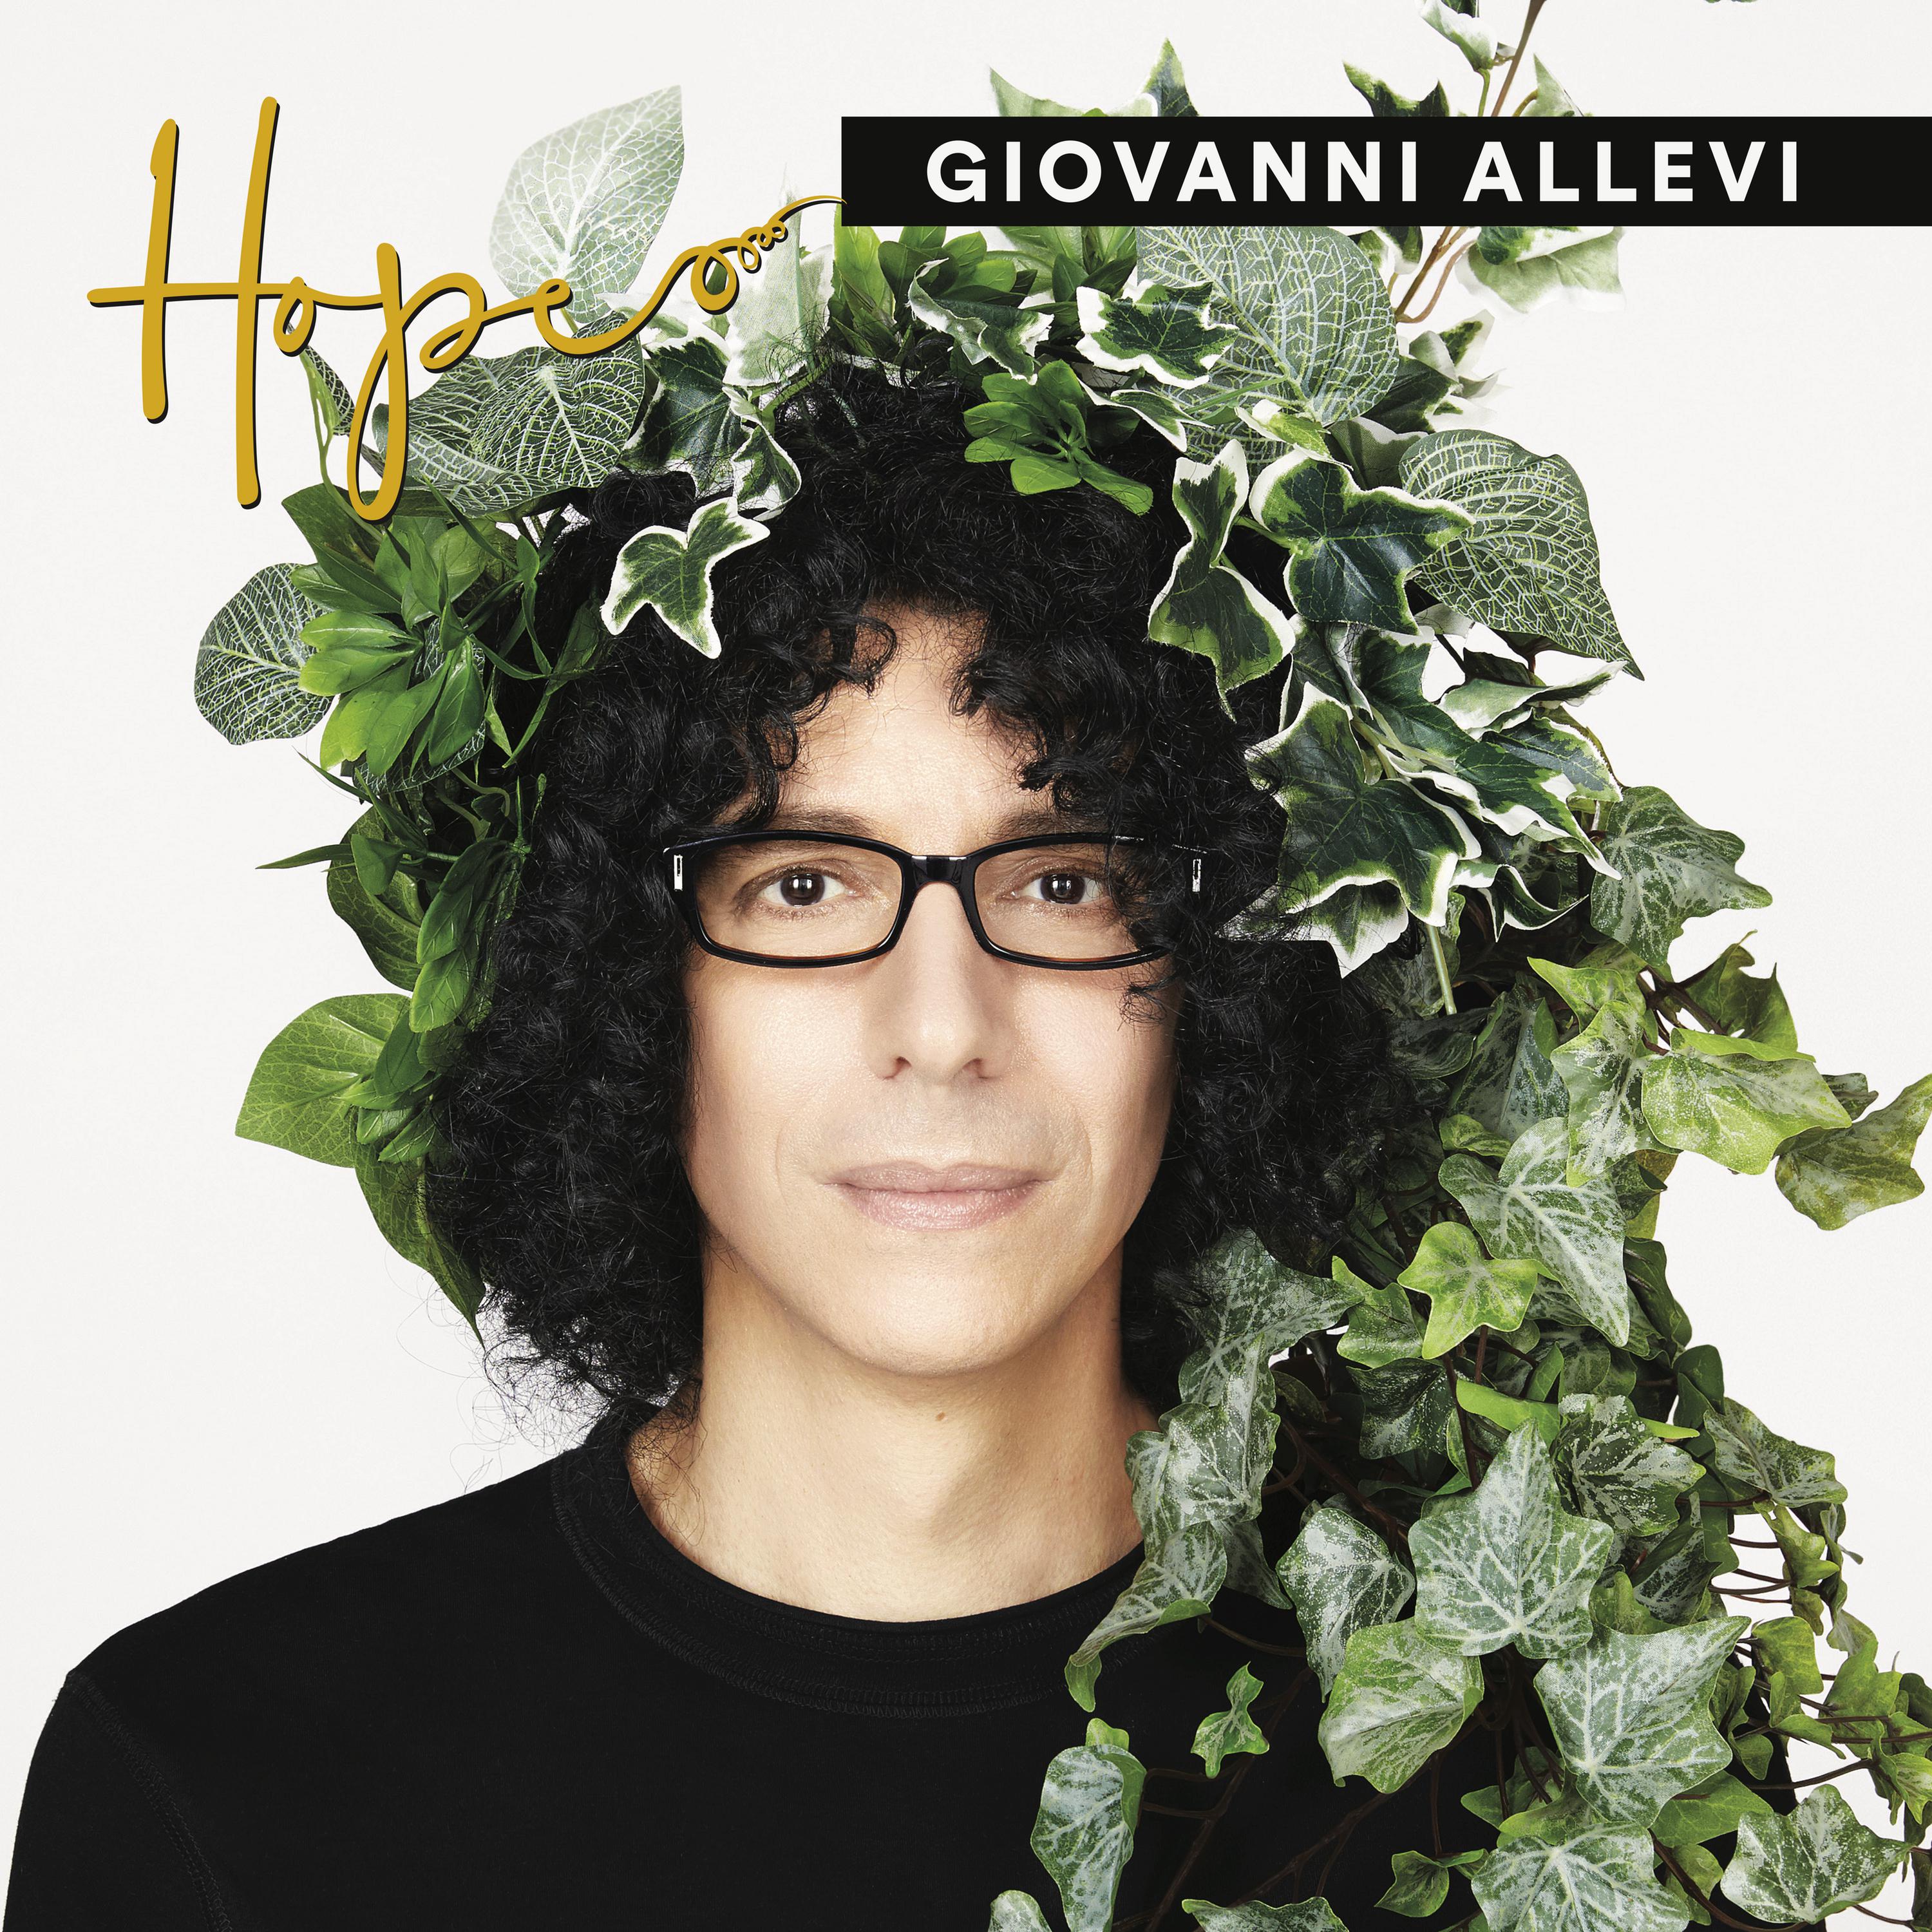 Giovanni Allevi - The answer of love